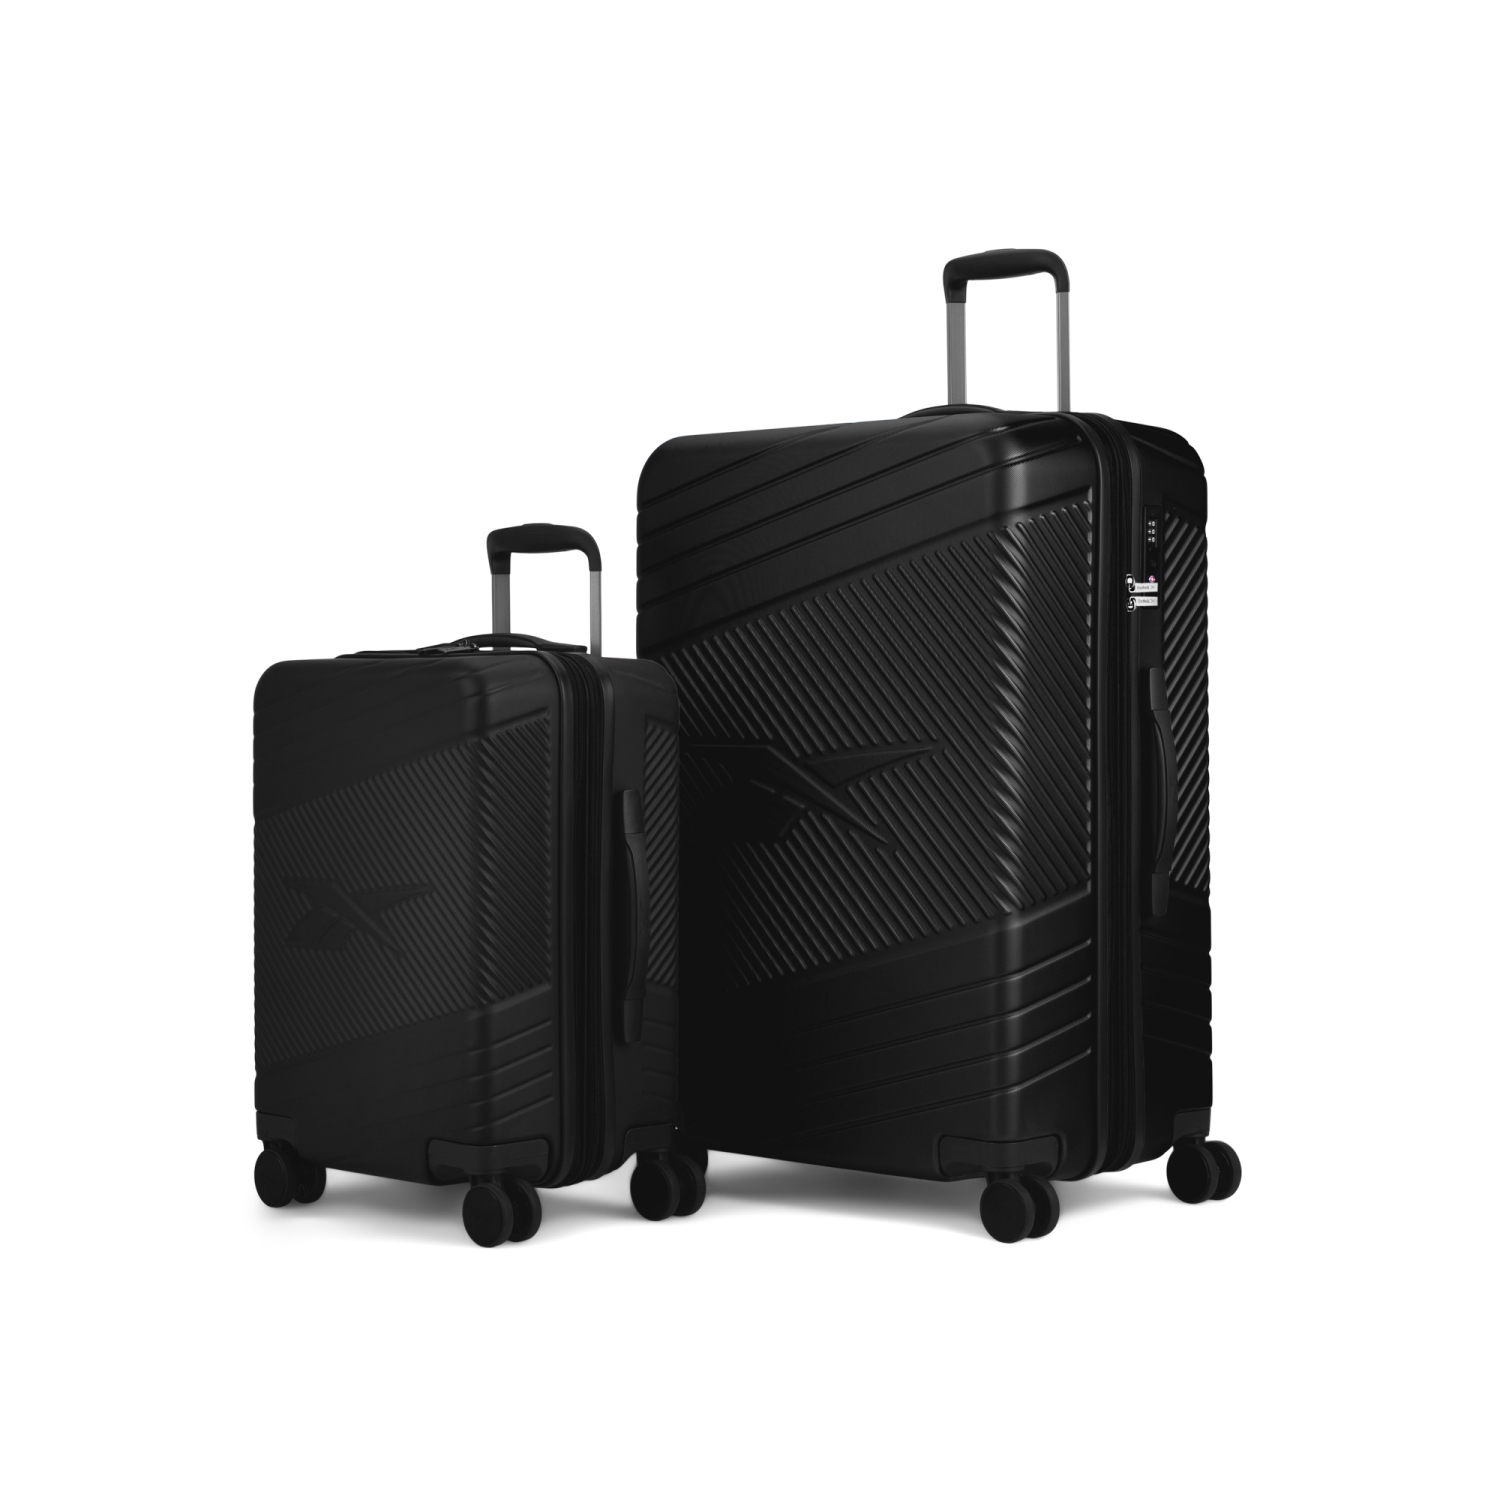 Reebok Go Collection - 2 pcs Luggage Set - Black